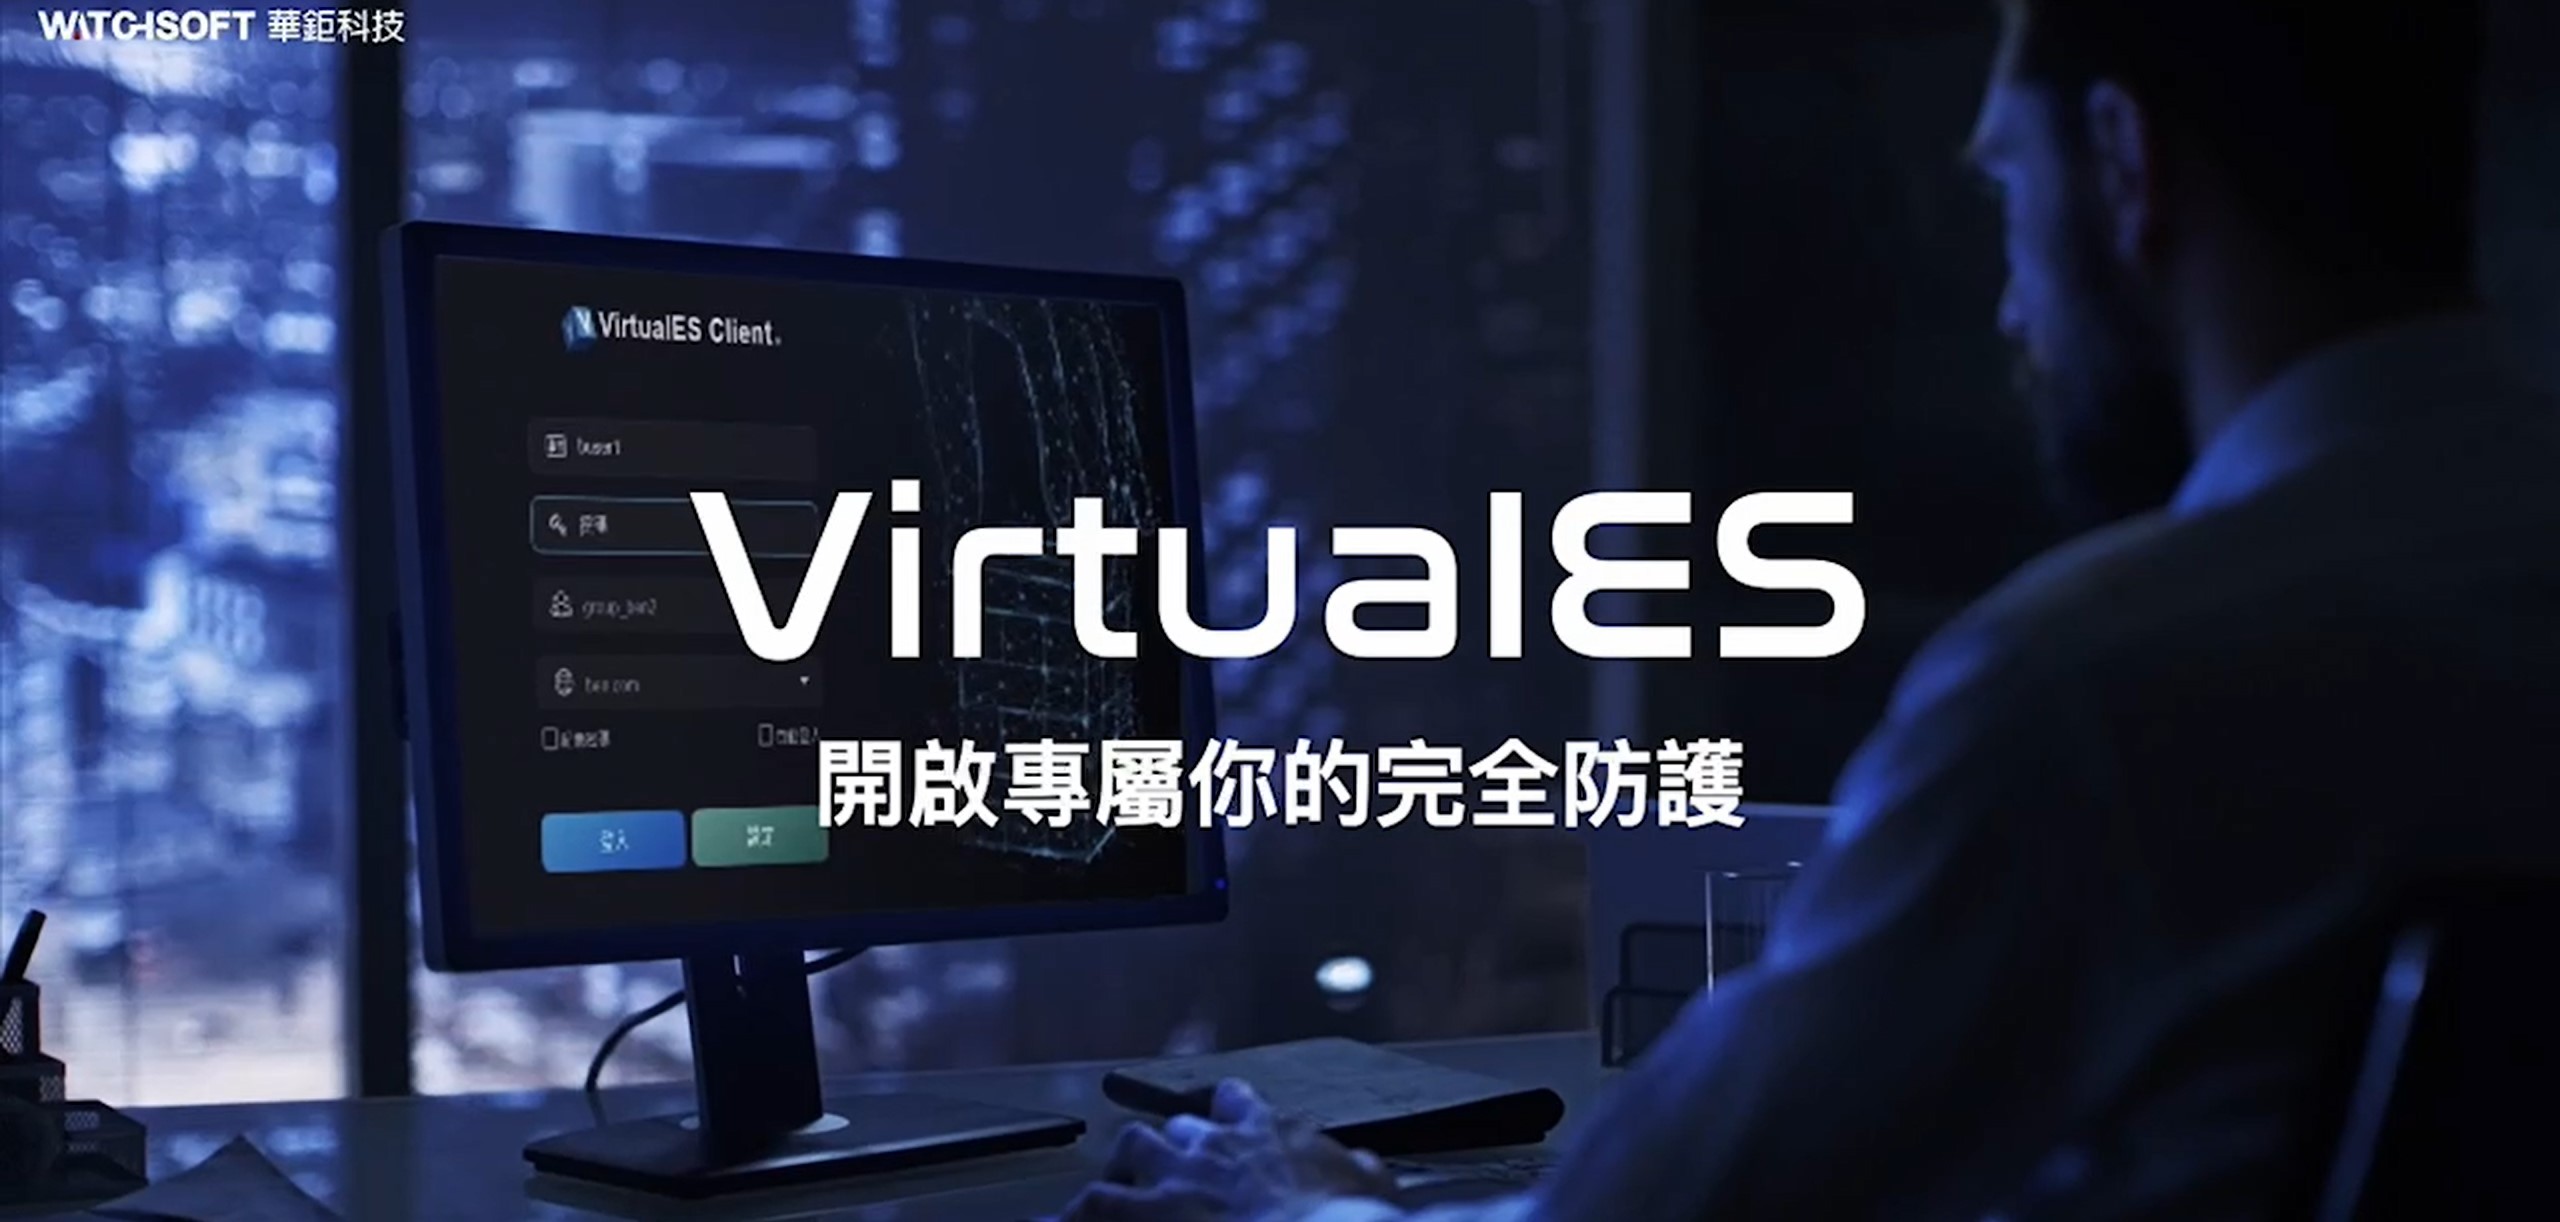 Virtual ES 您的數位方舟